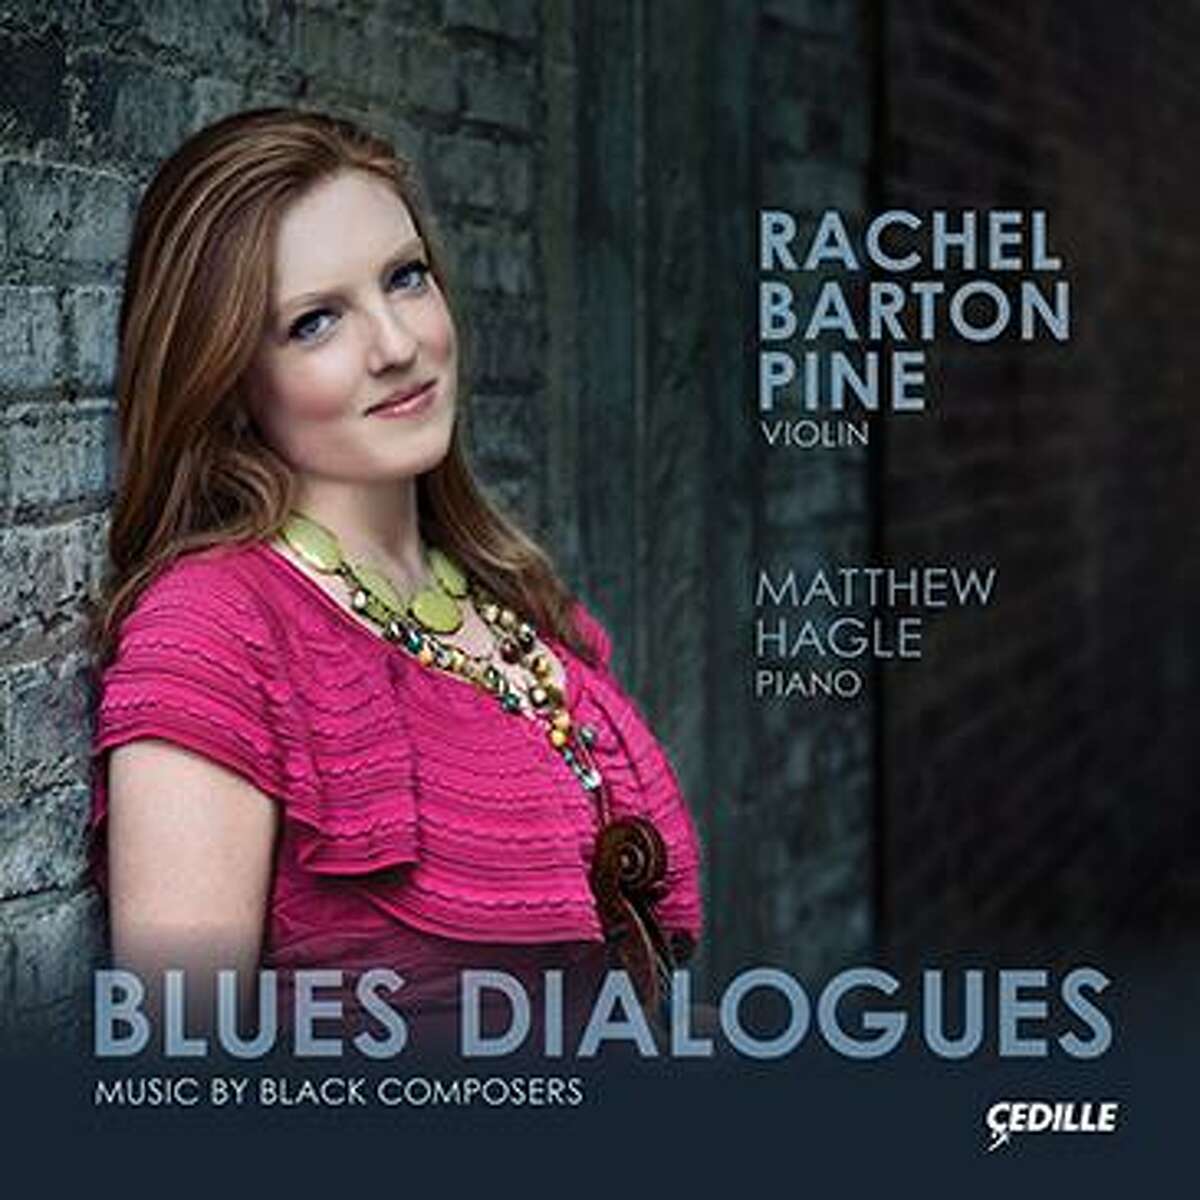 Rachel Barton Pine's "Blues Dialogues"